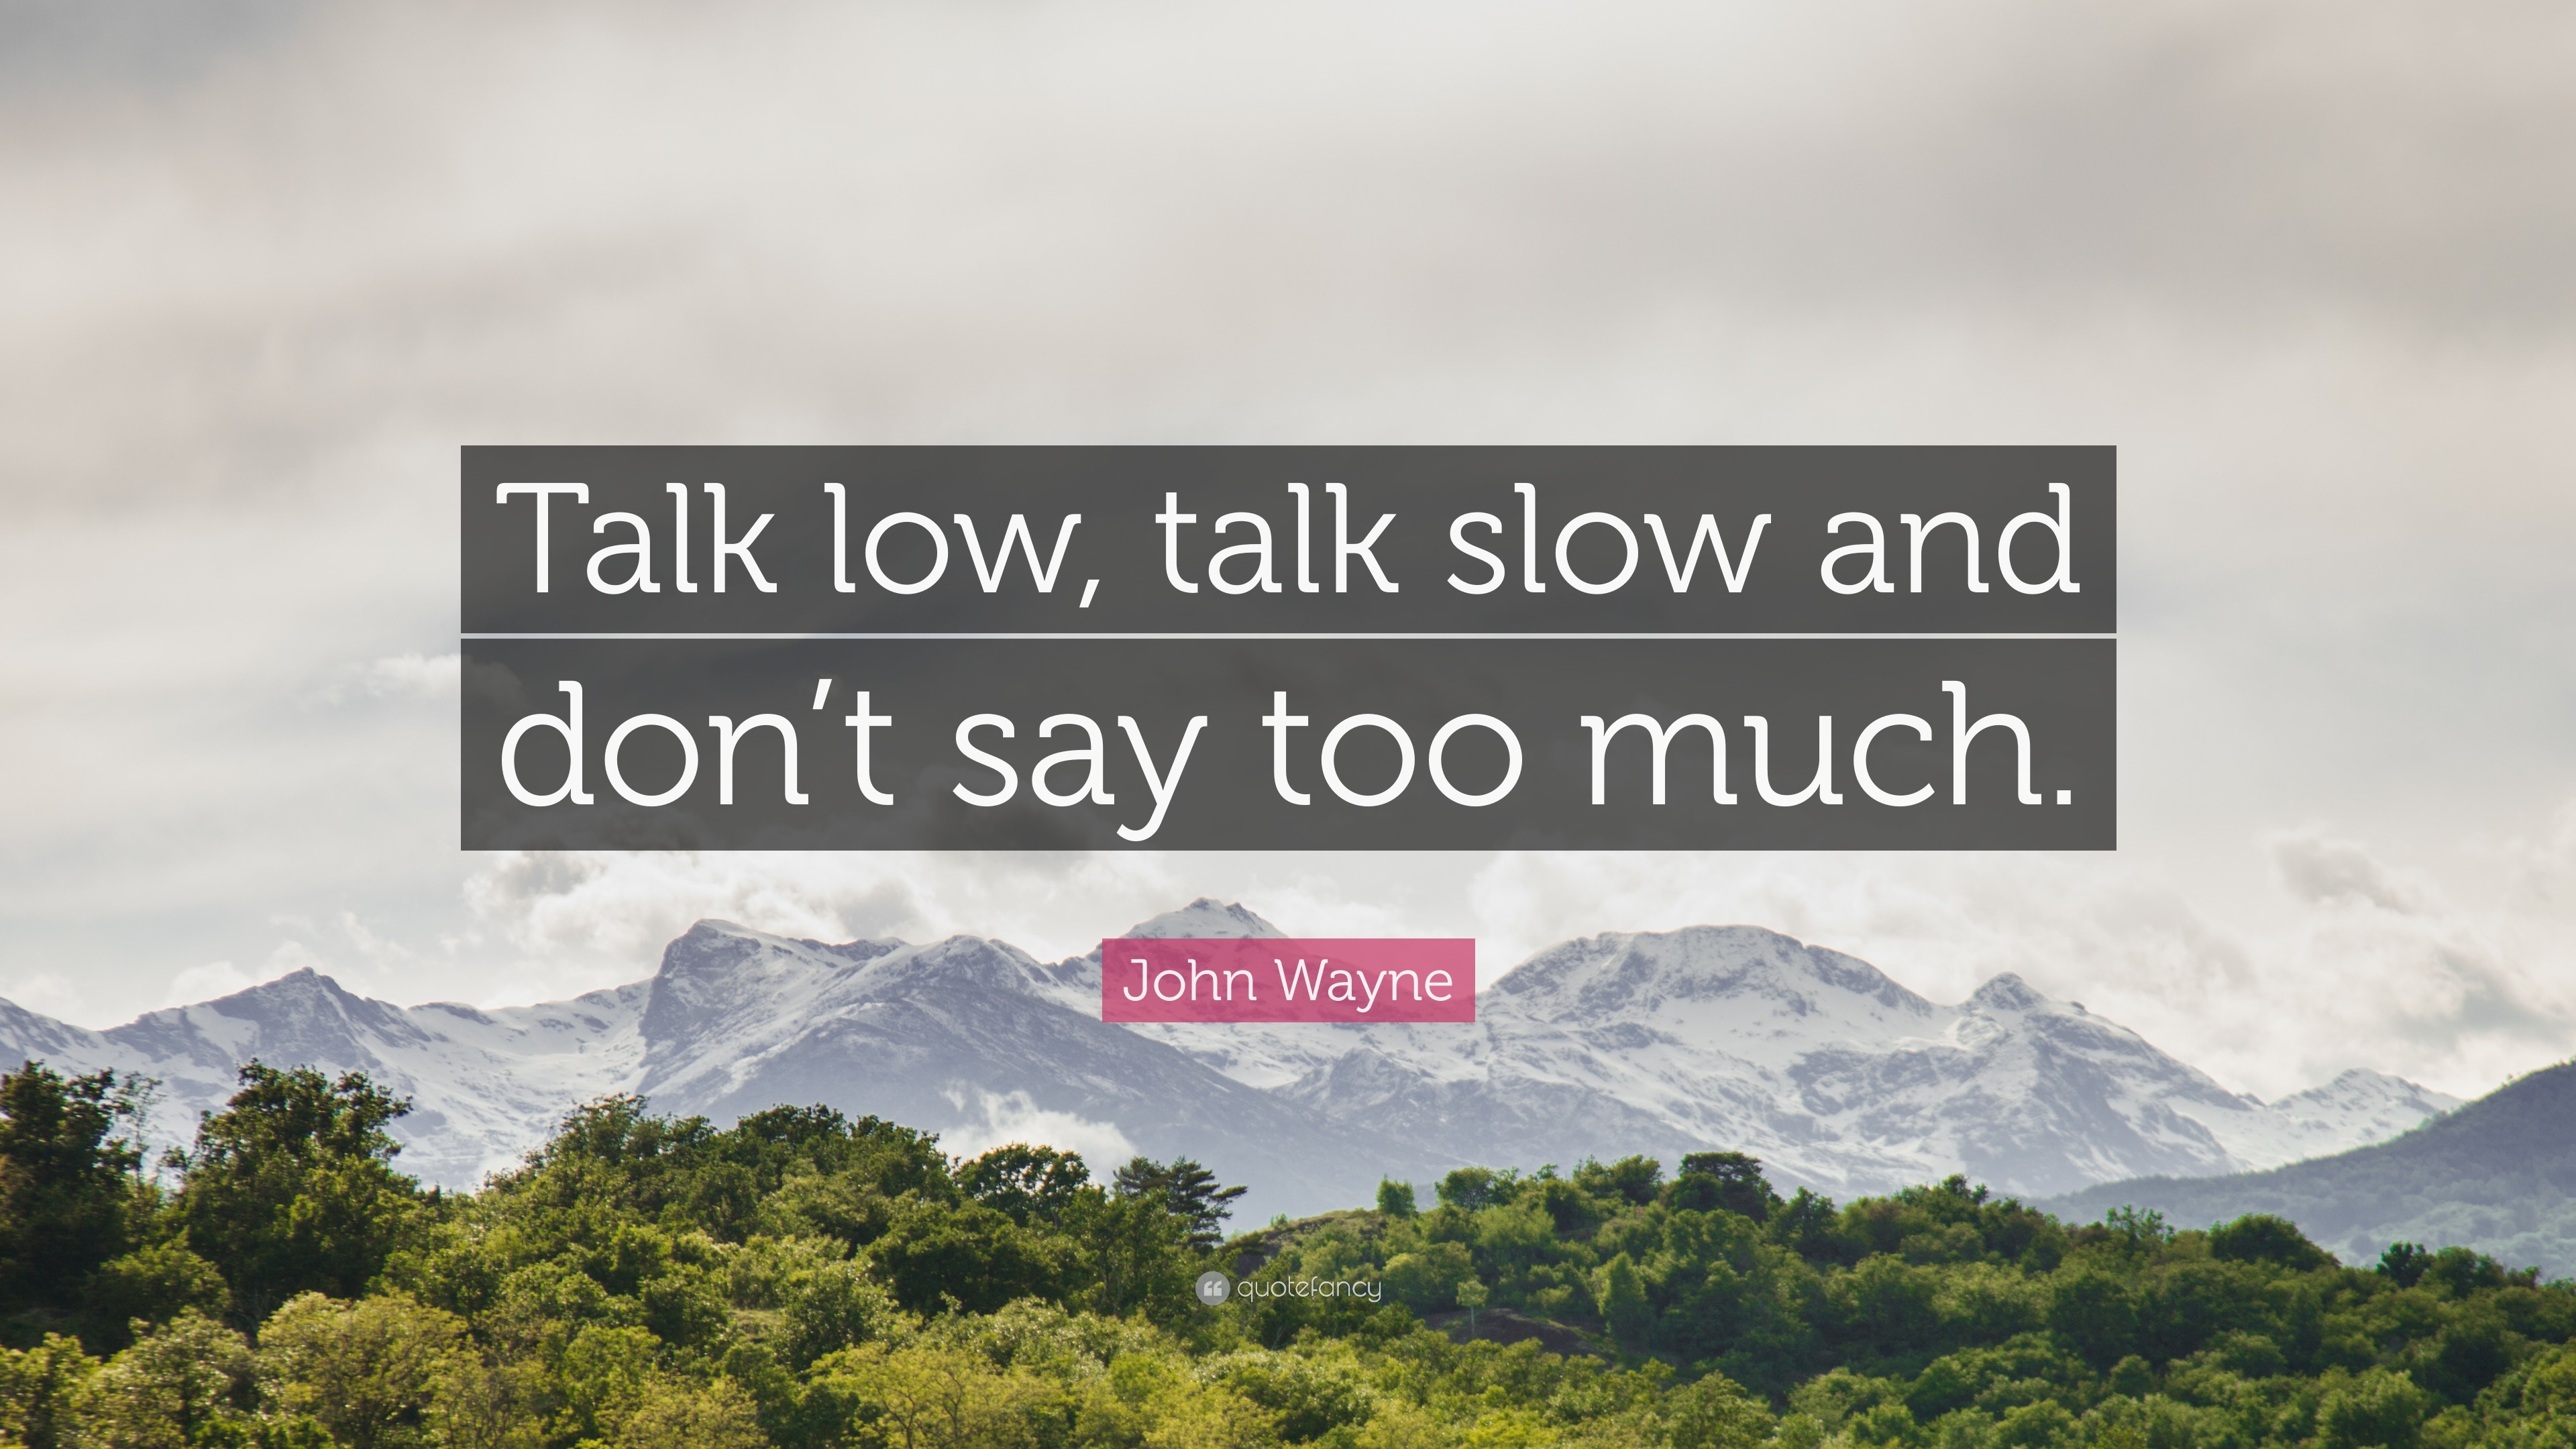 3840x2160 John Wayne Quote: “Talk low, talk slow and don't say too